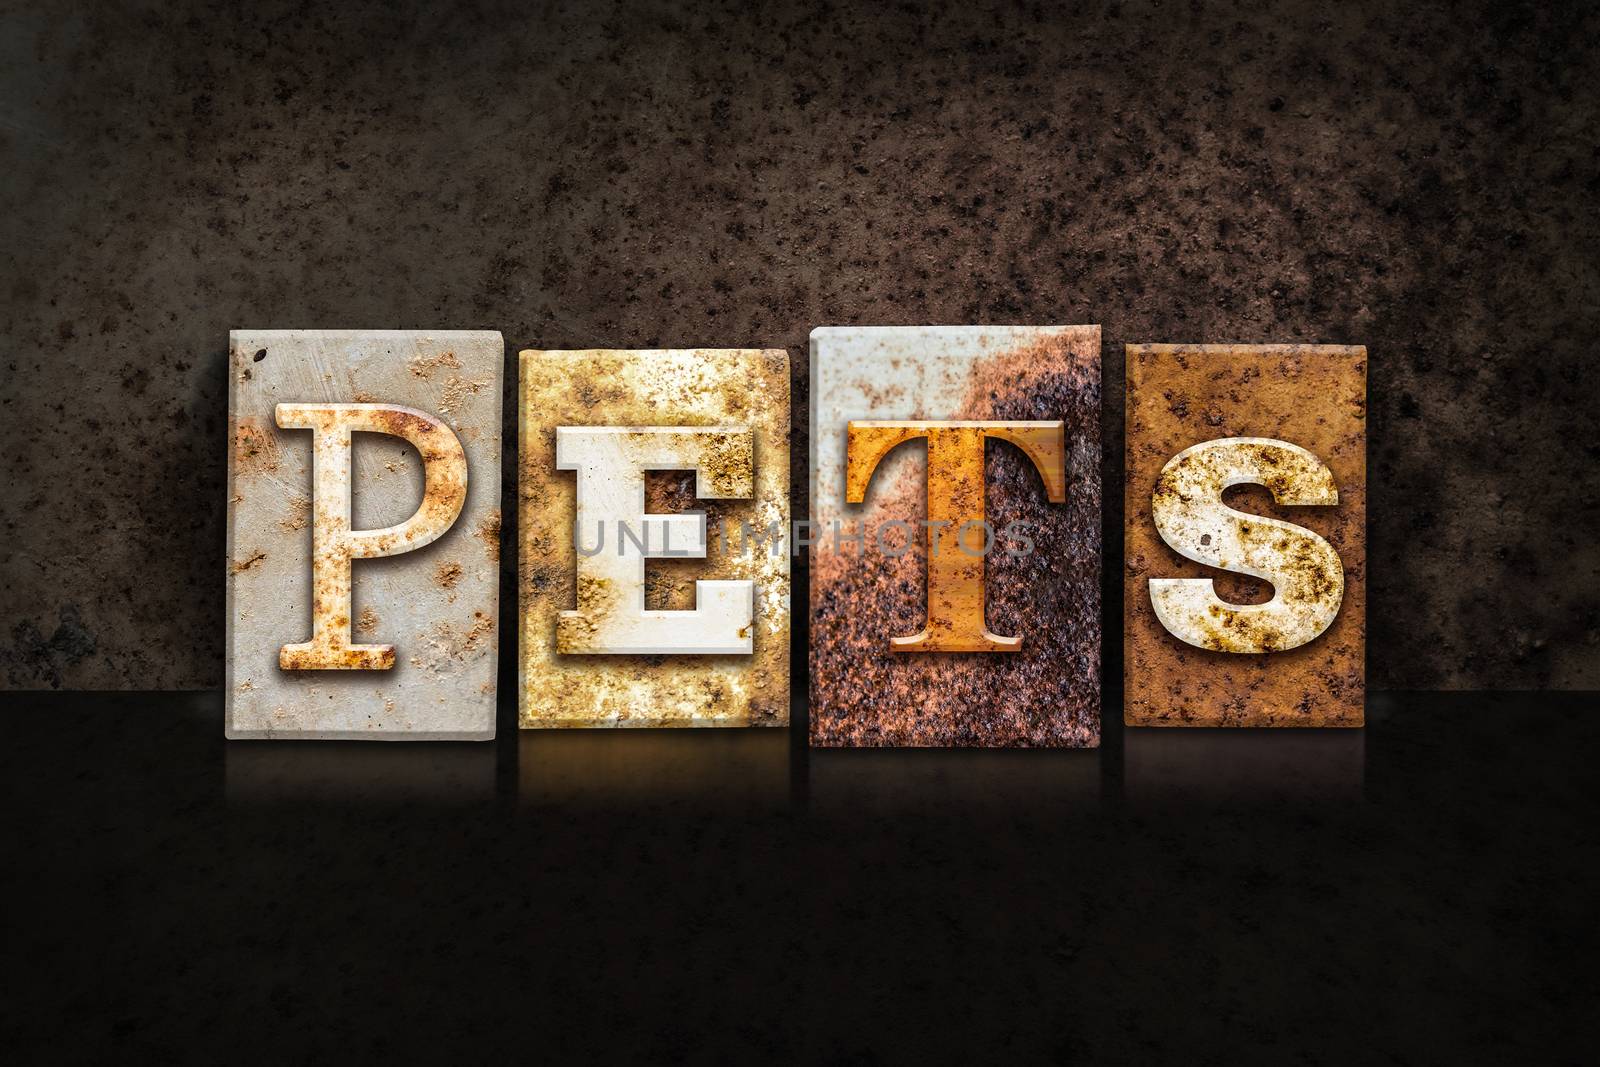 The word "PETS" written in rusty metal letterpress type on a dark textured grunge background.